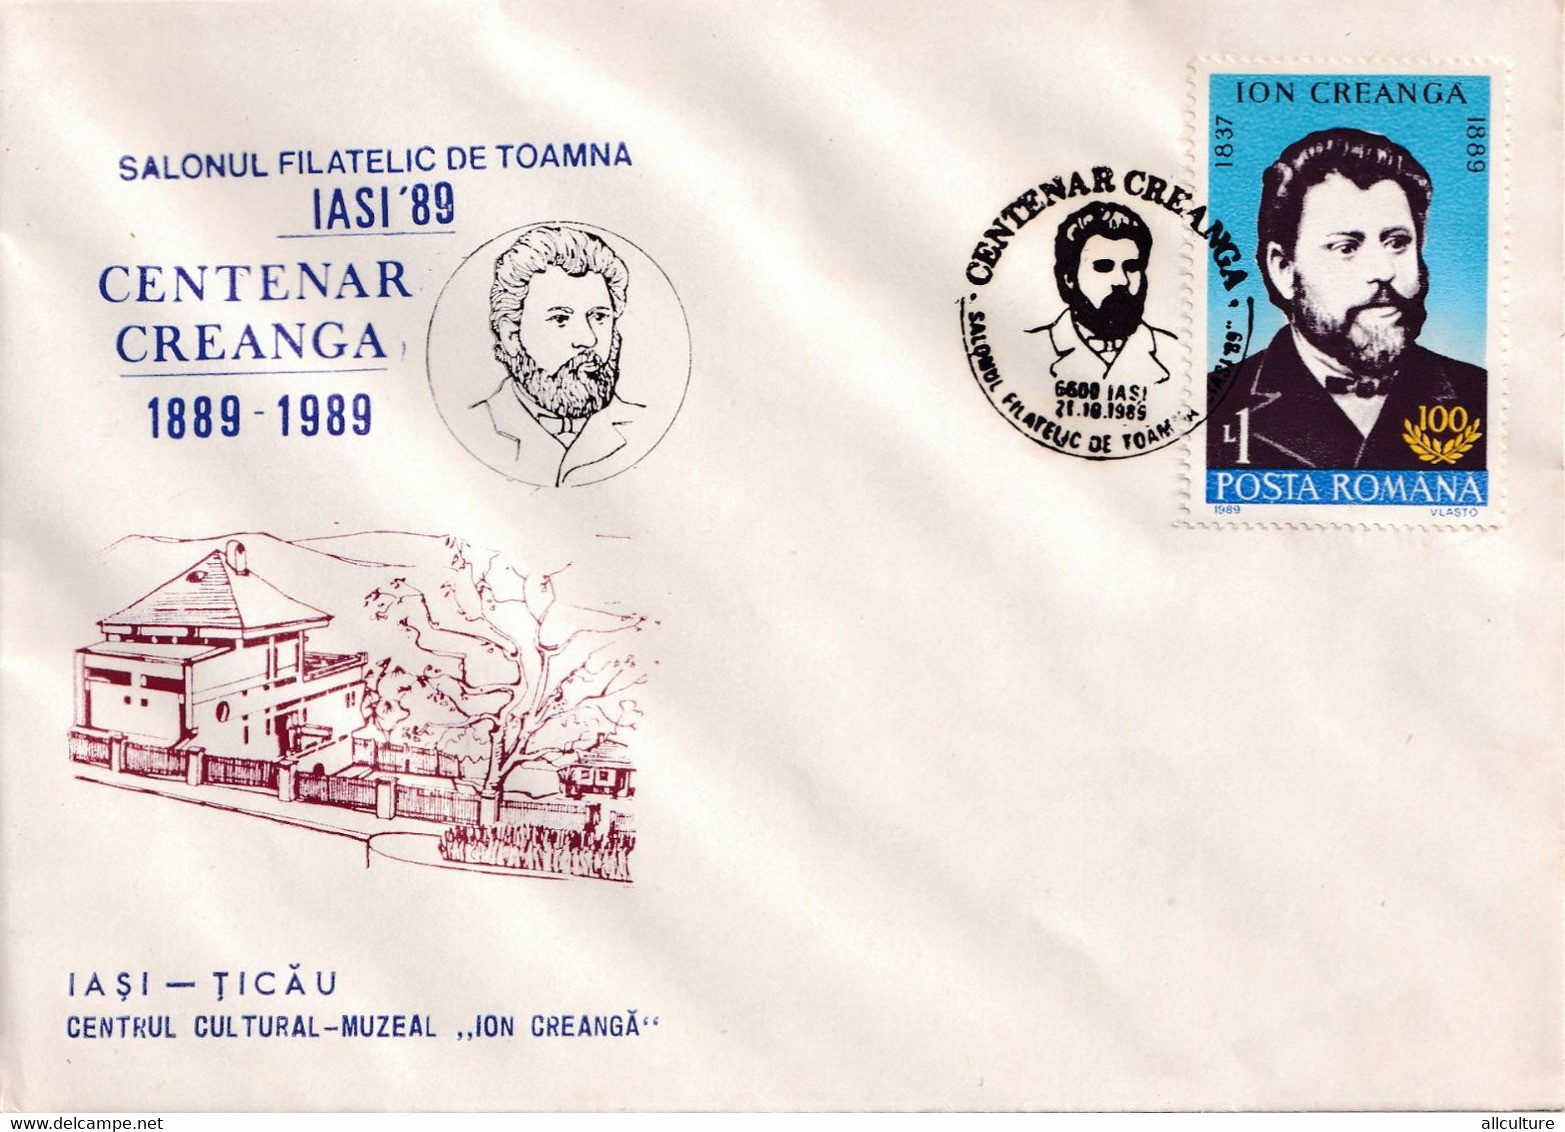 A3019 - Salonul Filatelic Iasi '89, Centenar Creanga, Iasi Ticau 1989 Republica Socialista Romania Posta Romana - Lettres & Documents